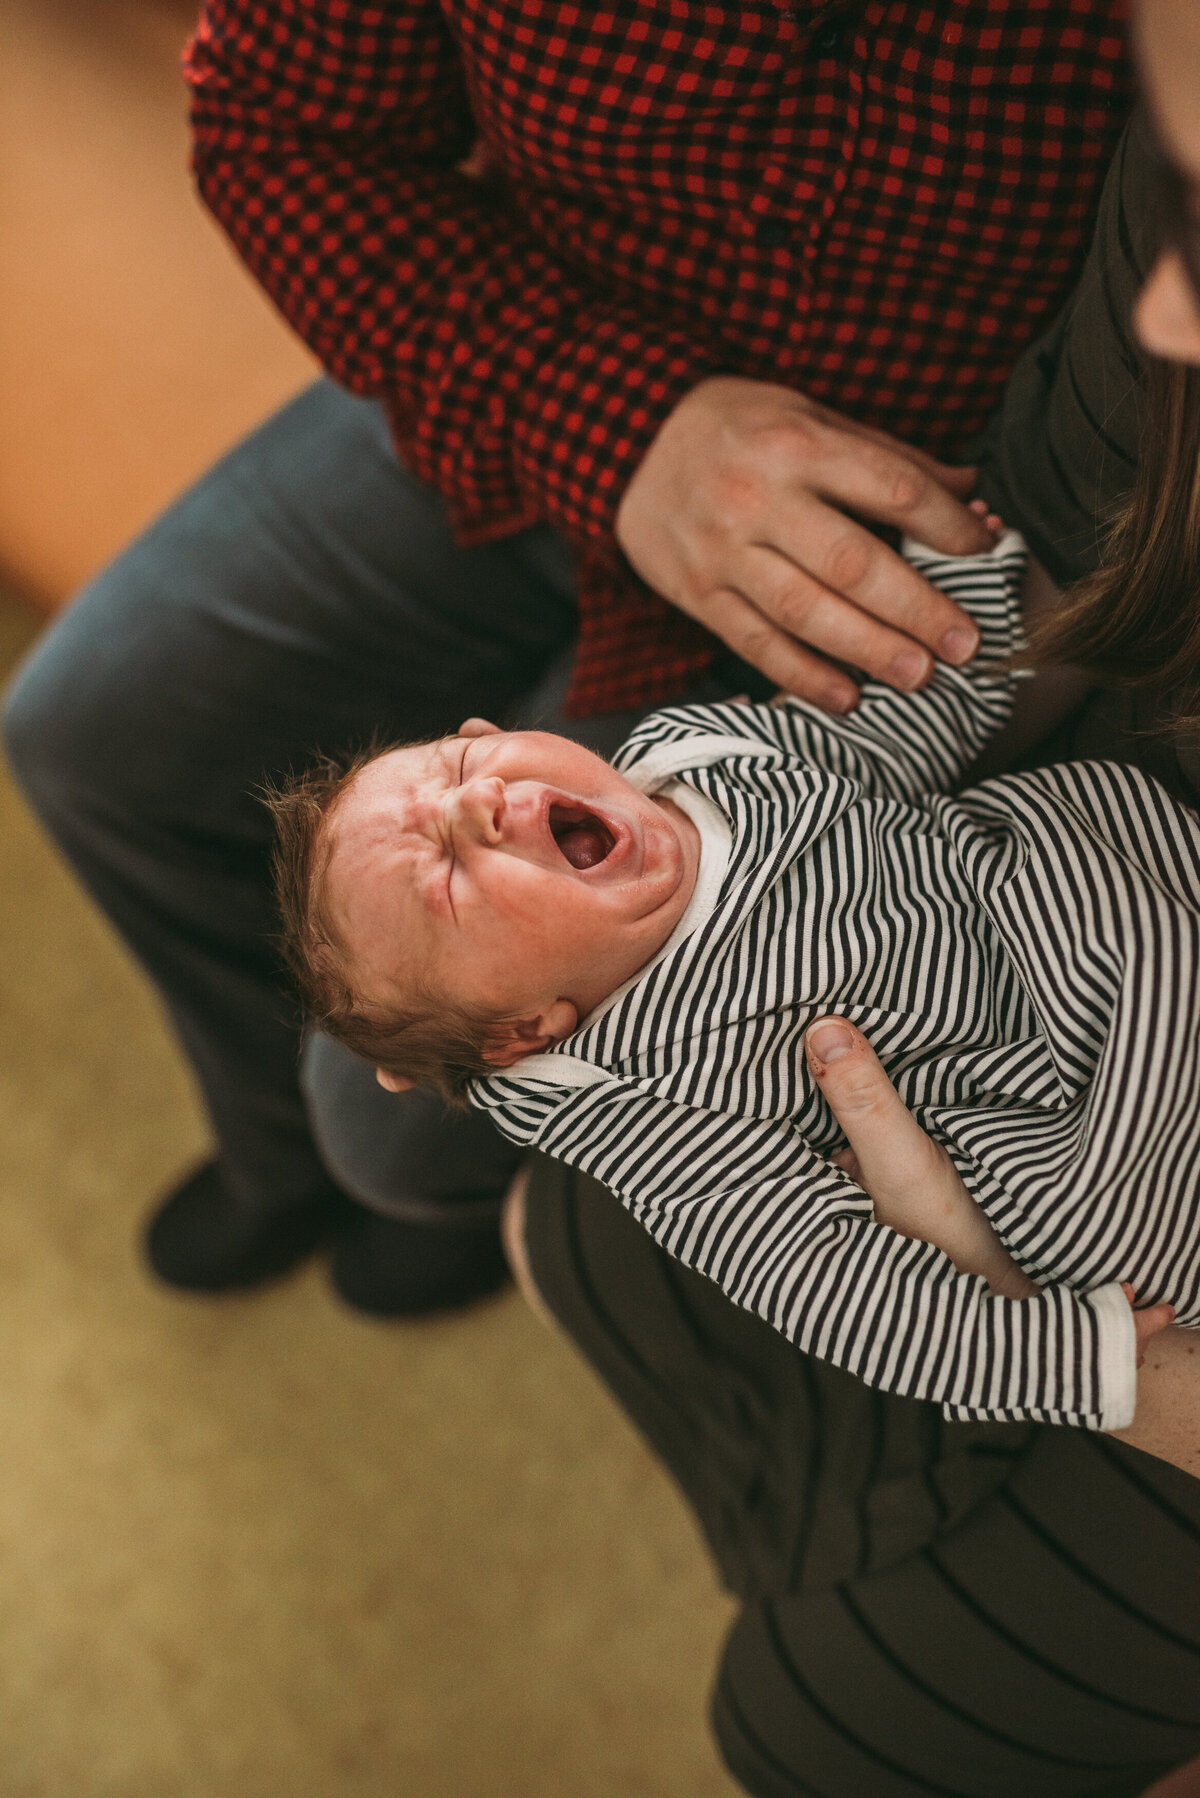 newborn yawning in hospital